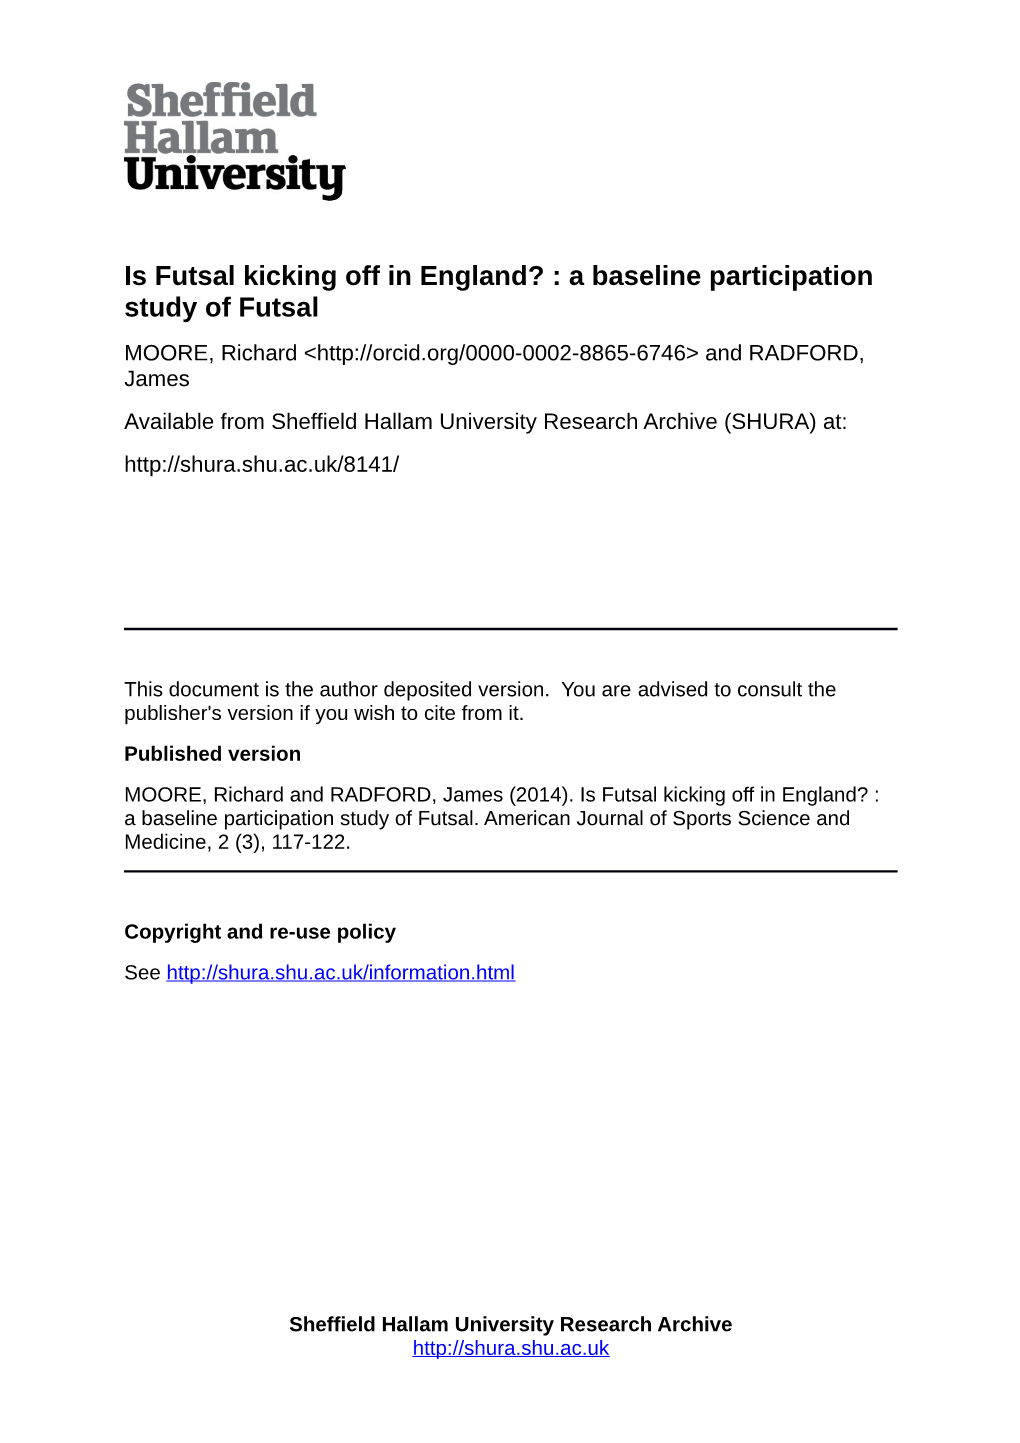 Is Futsal Kicking Off in England? : a Baseline Participation Study of Futsal